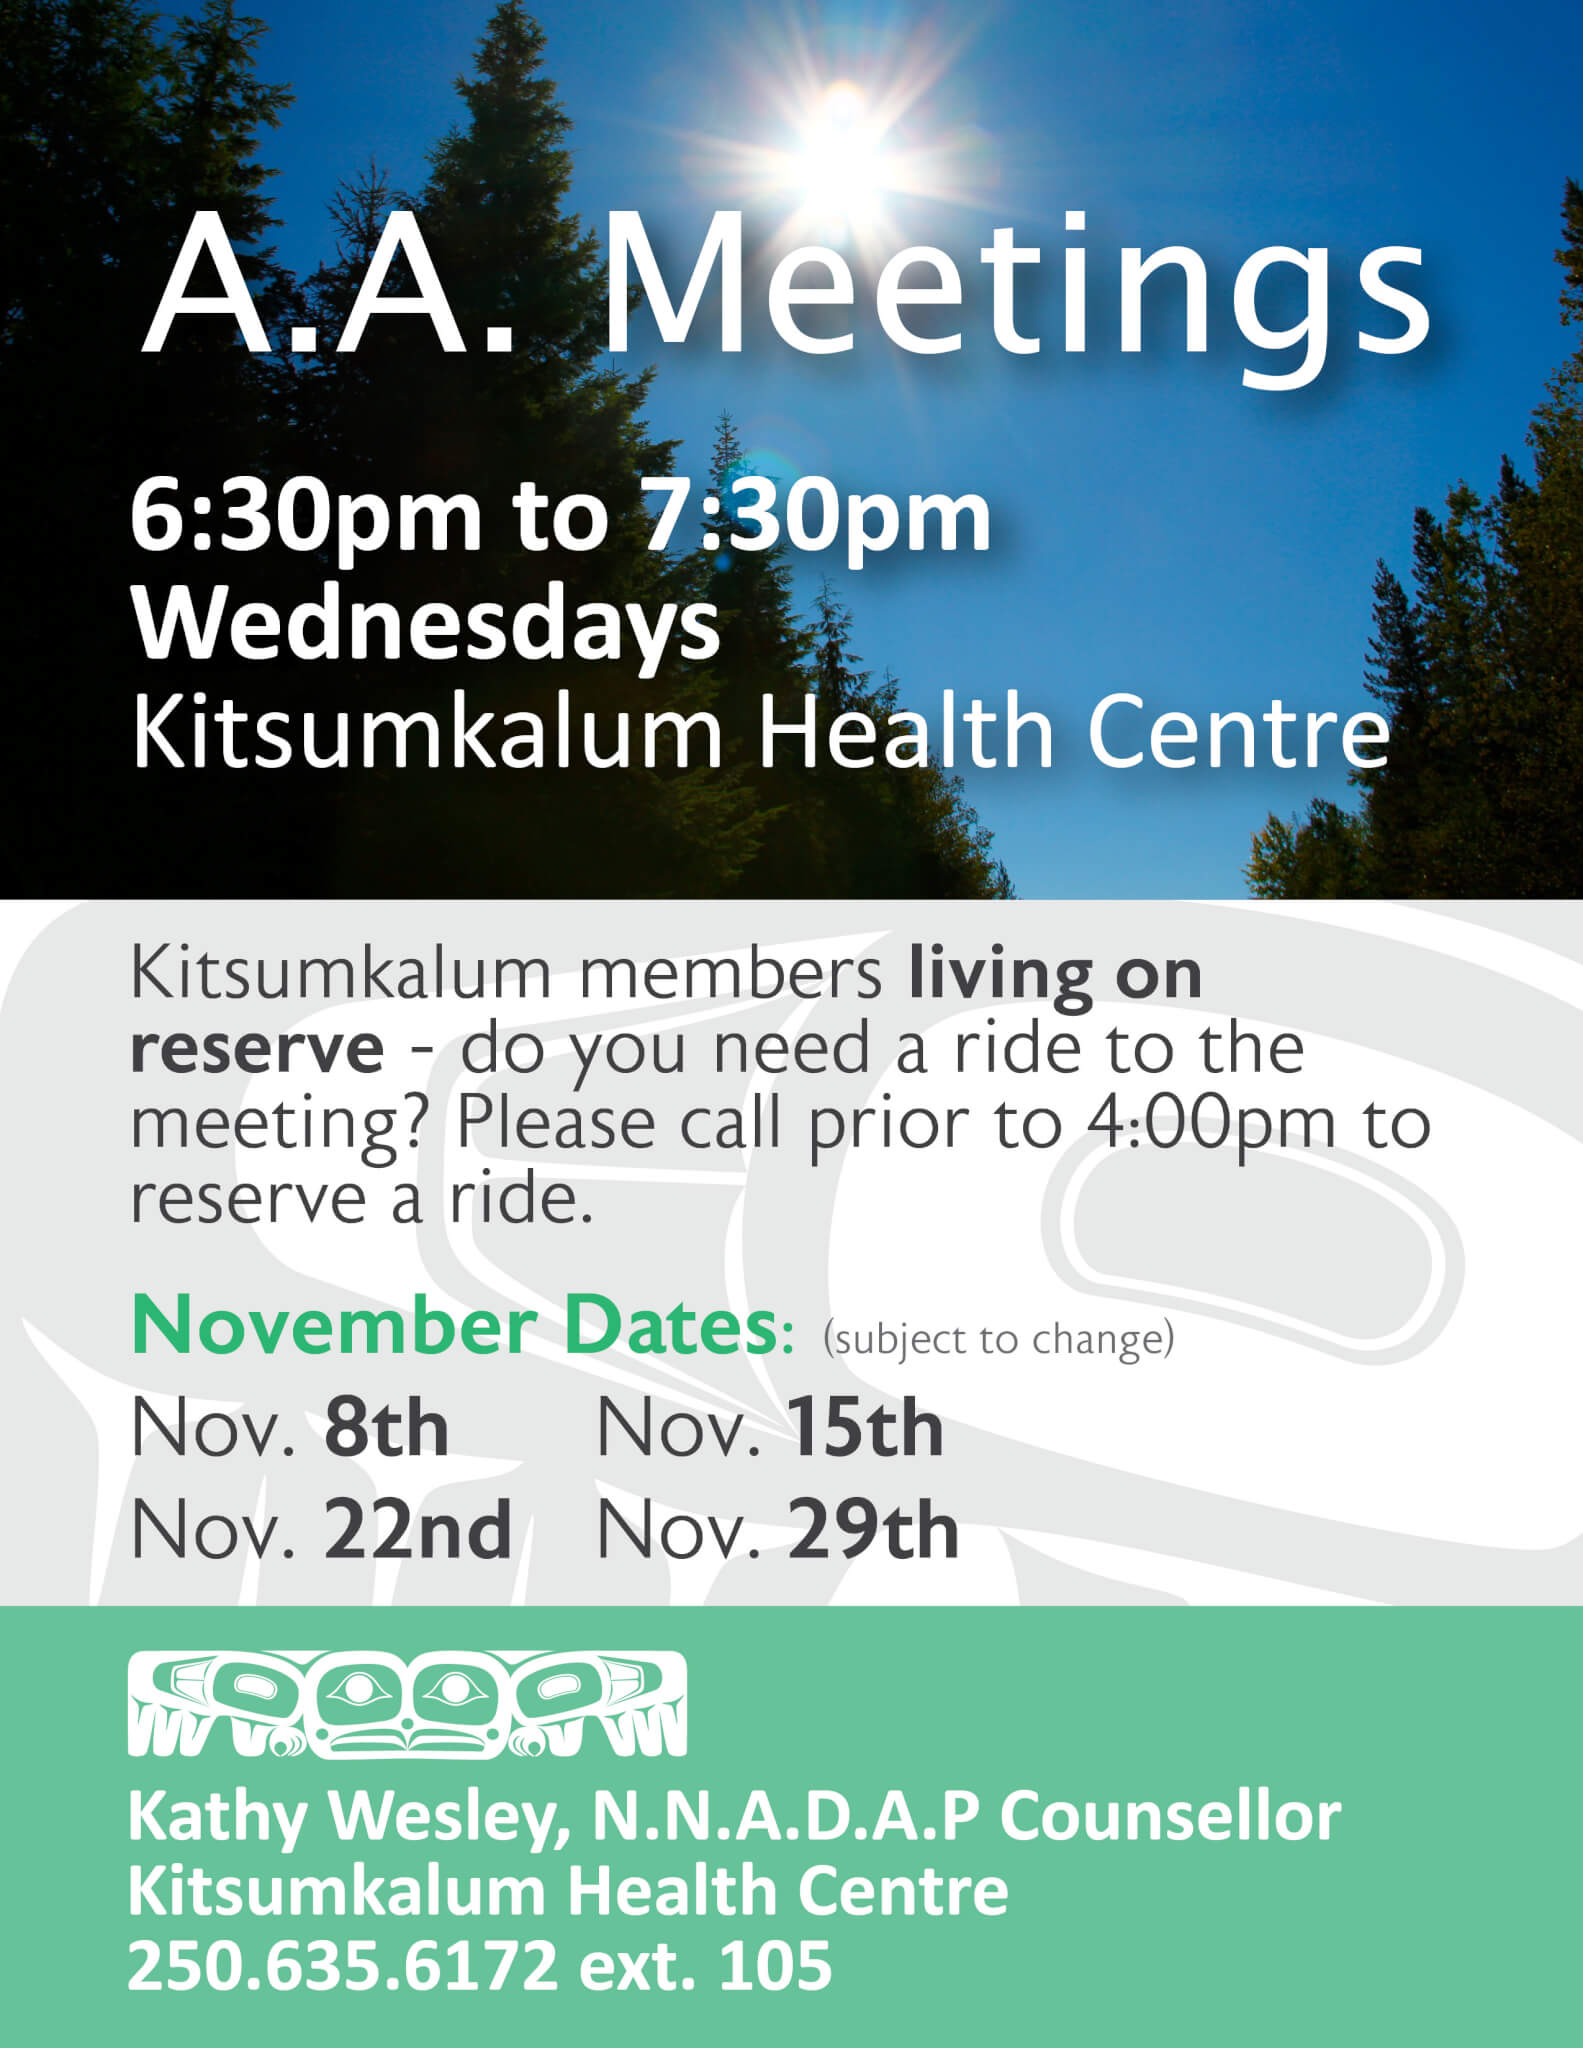 A.A. Meetings on Wednesdays in Kitsumkalum